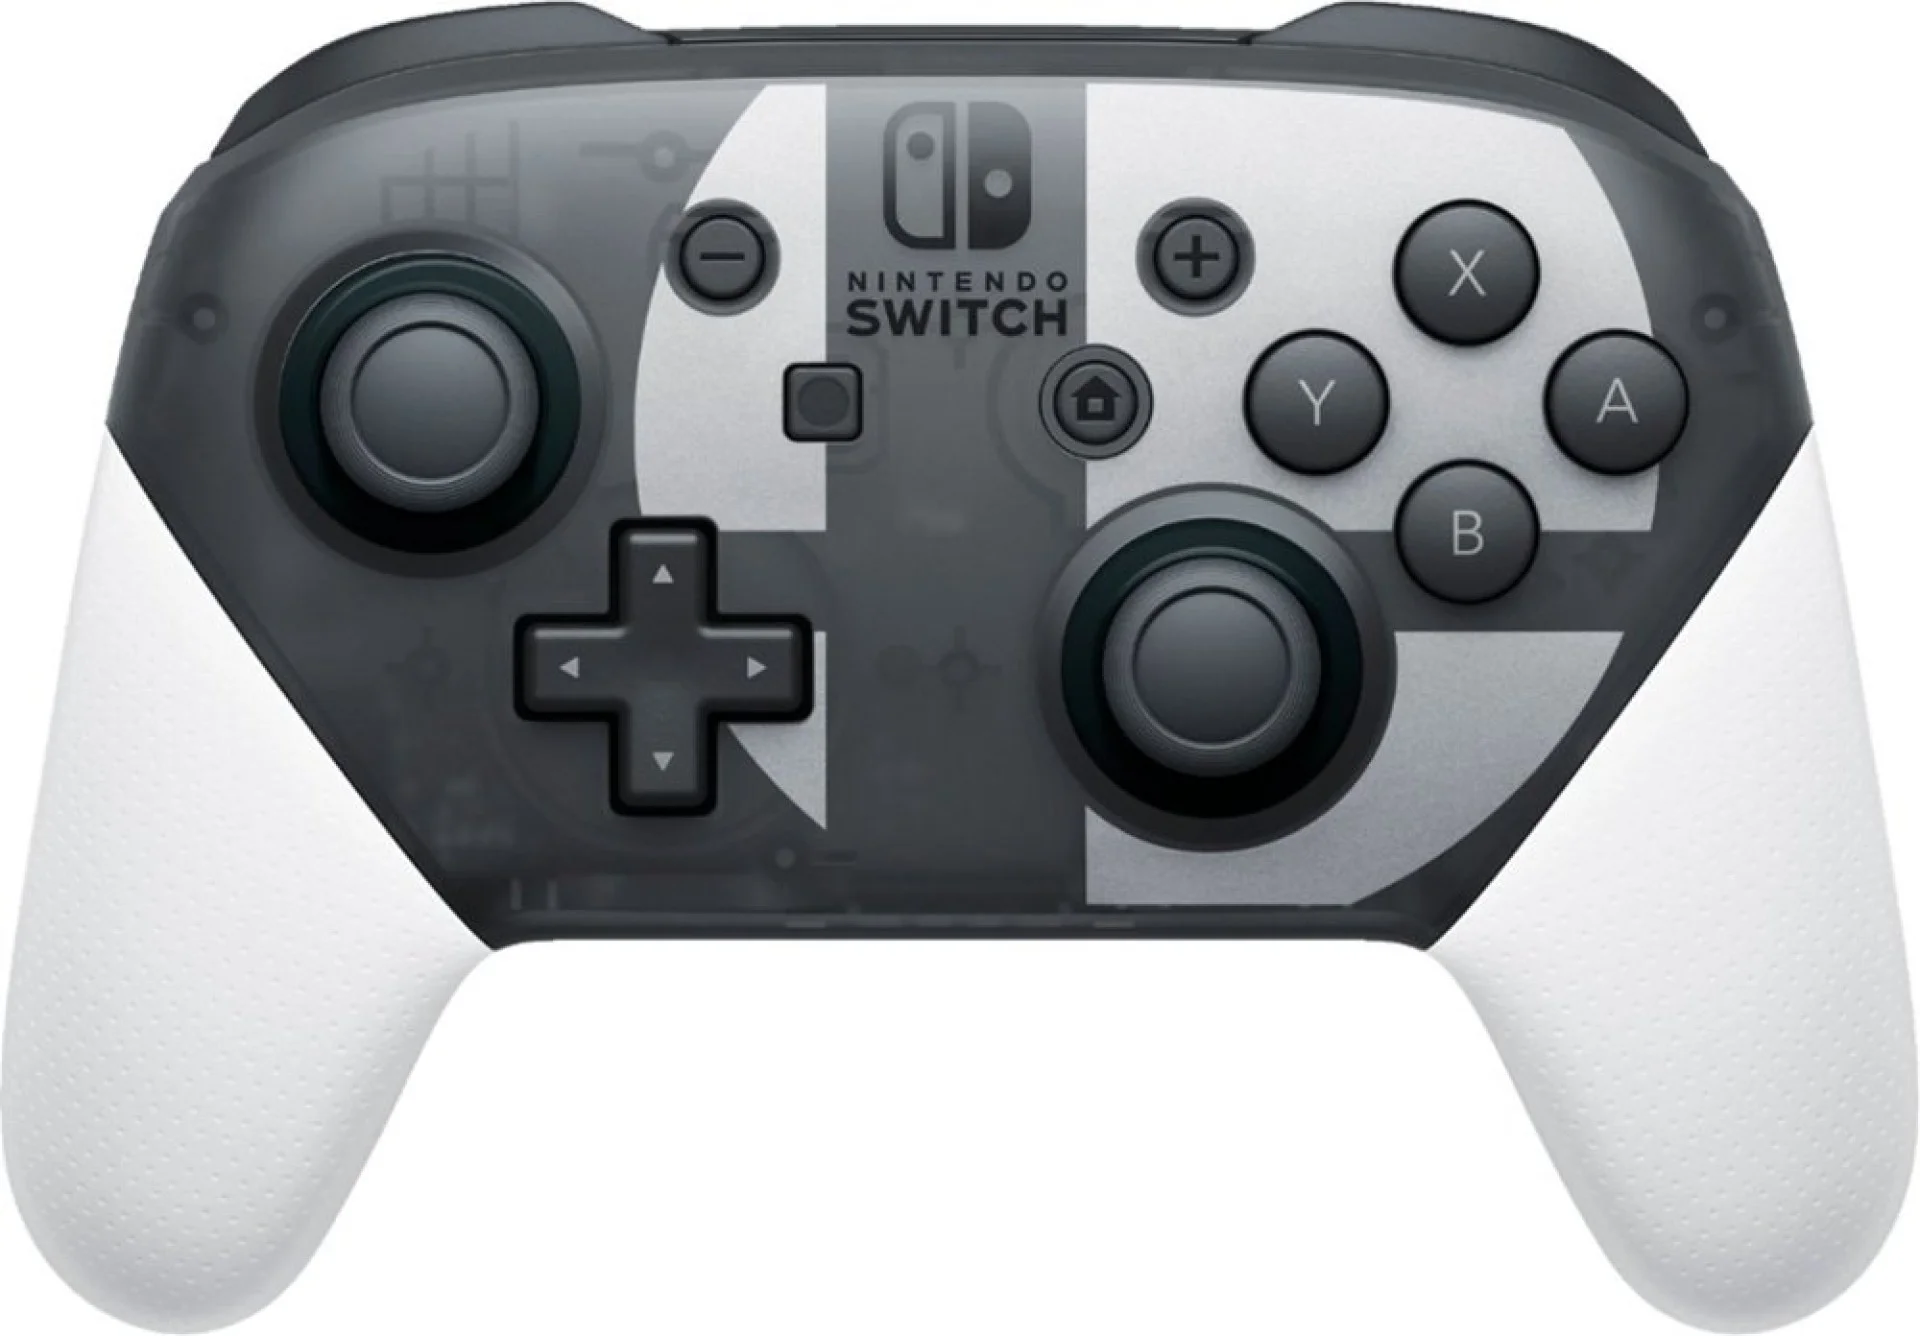  Nintendo Switch Super Smash Bros. Pro Controller [AUS]